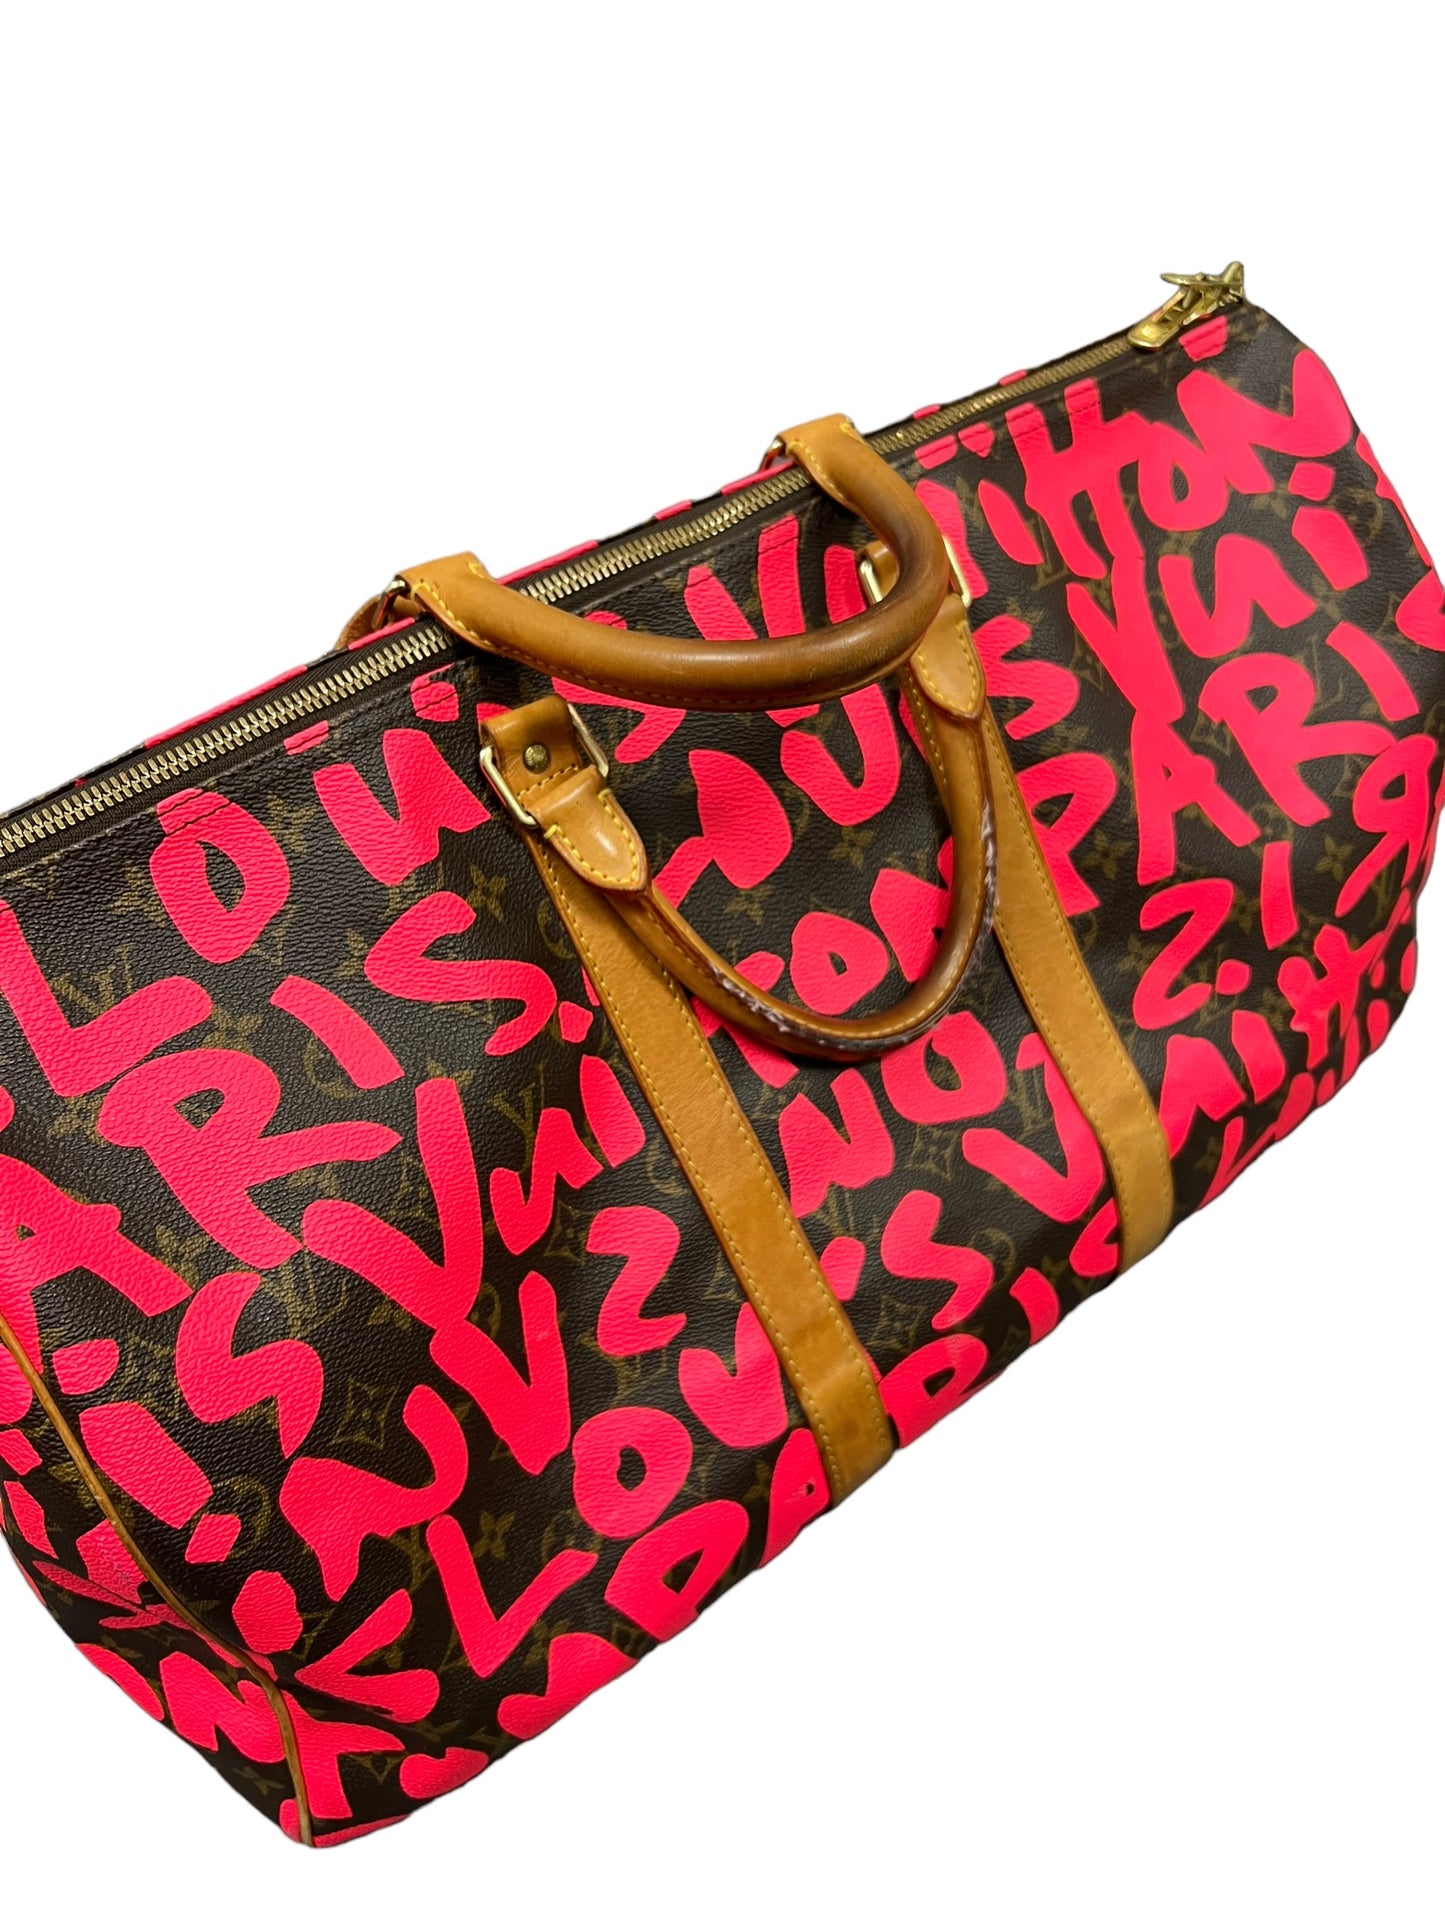 Louis Vuitton Stephen Sprouse Duffel Bag